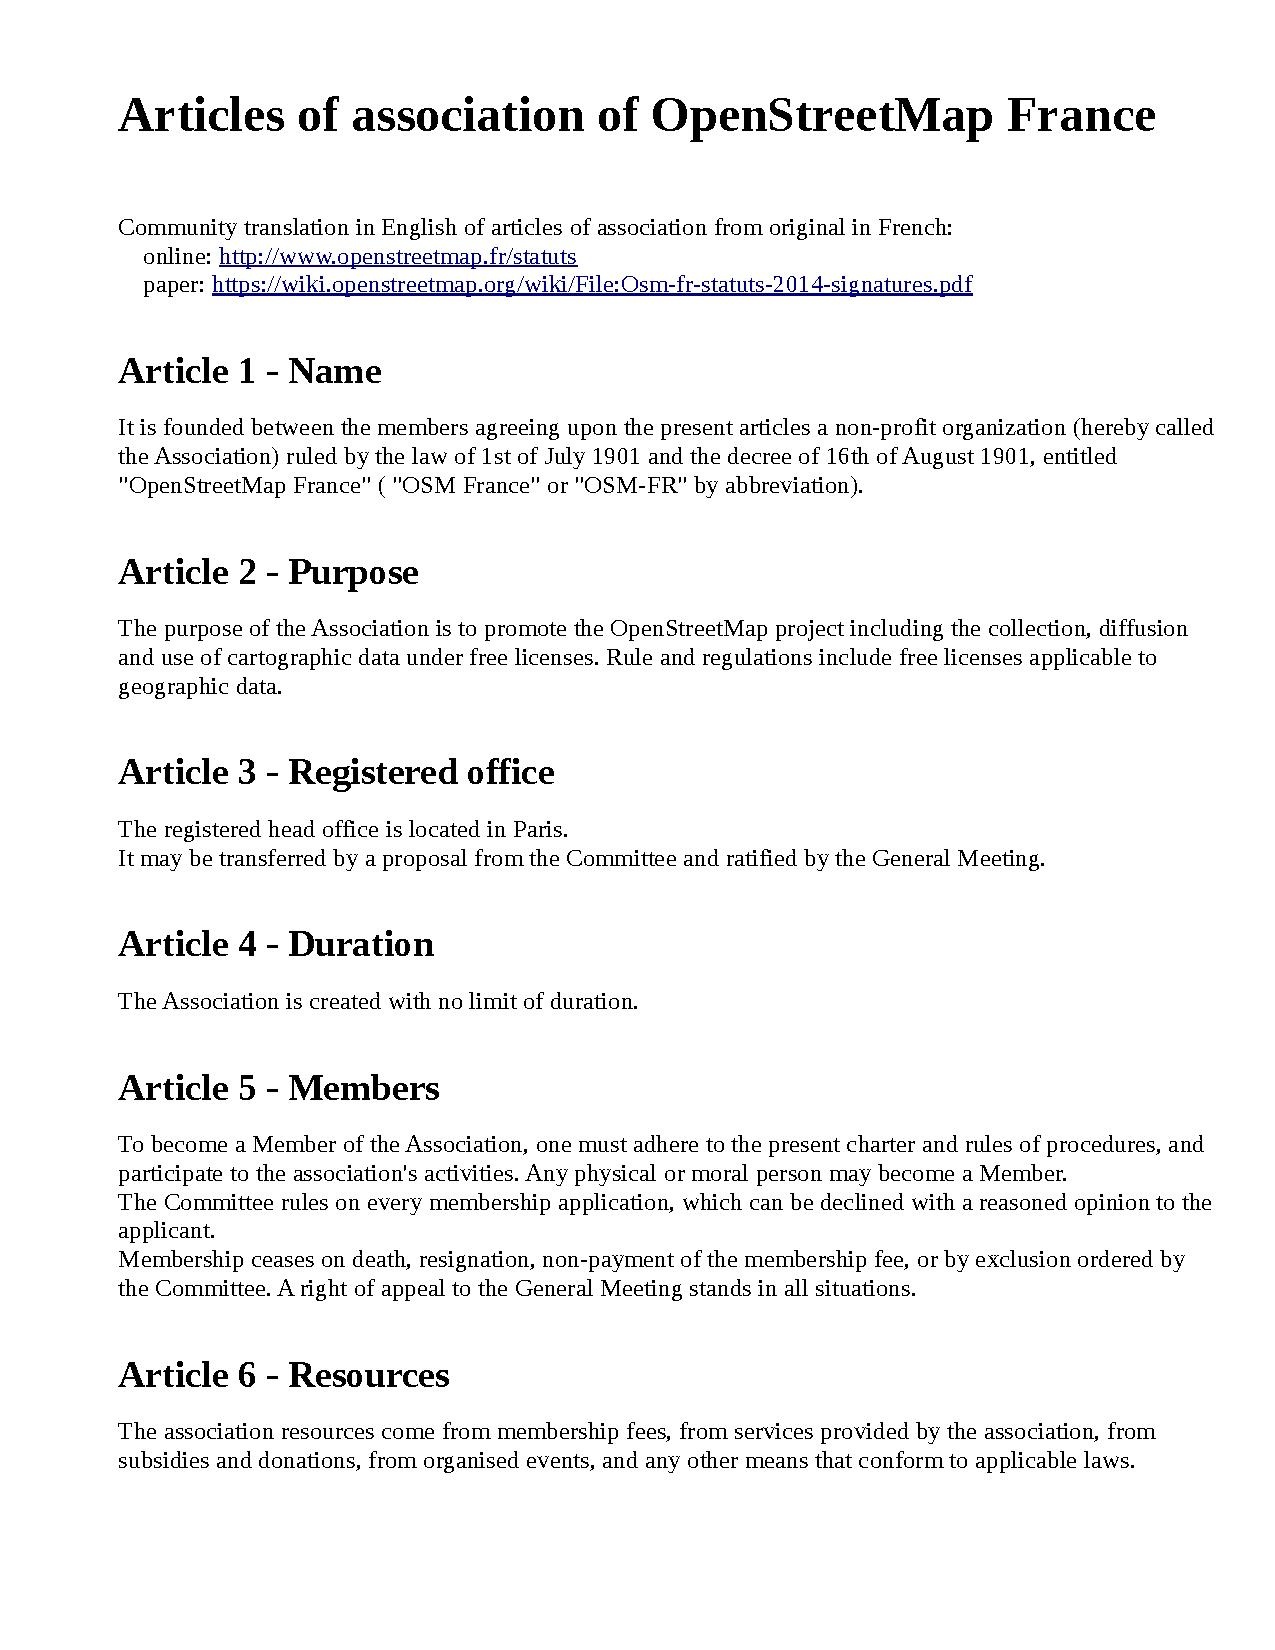 OSM FR articles of association.pdf